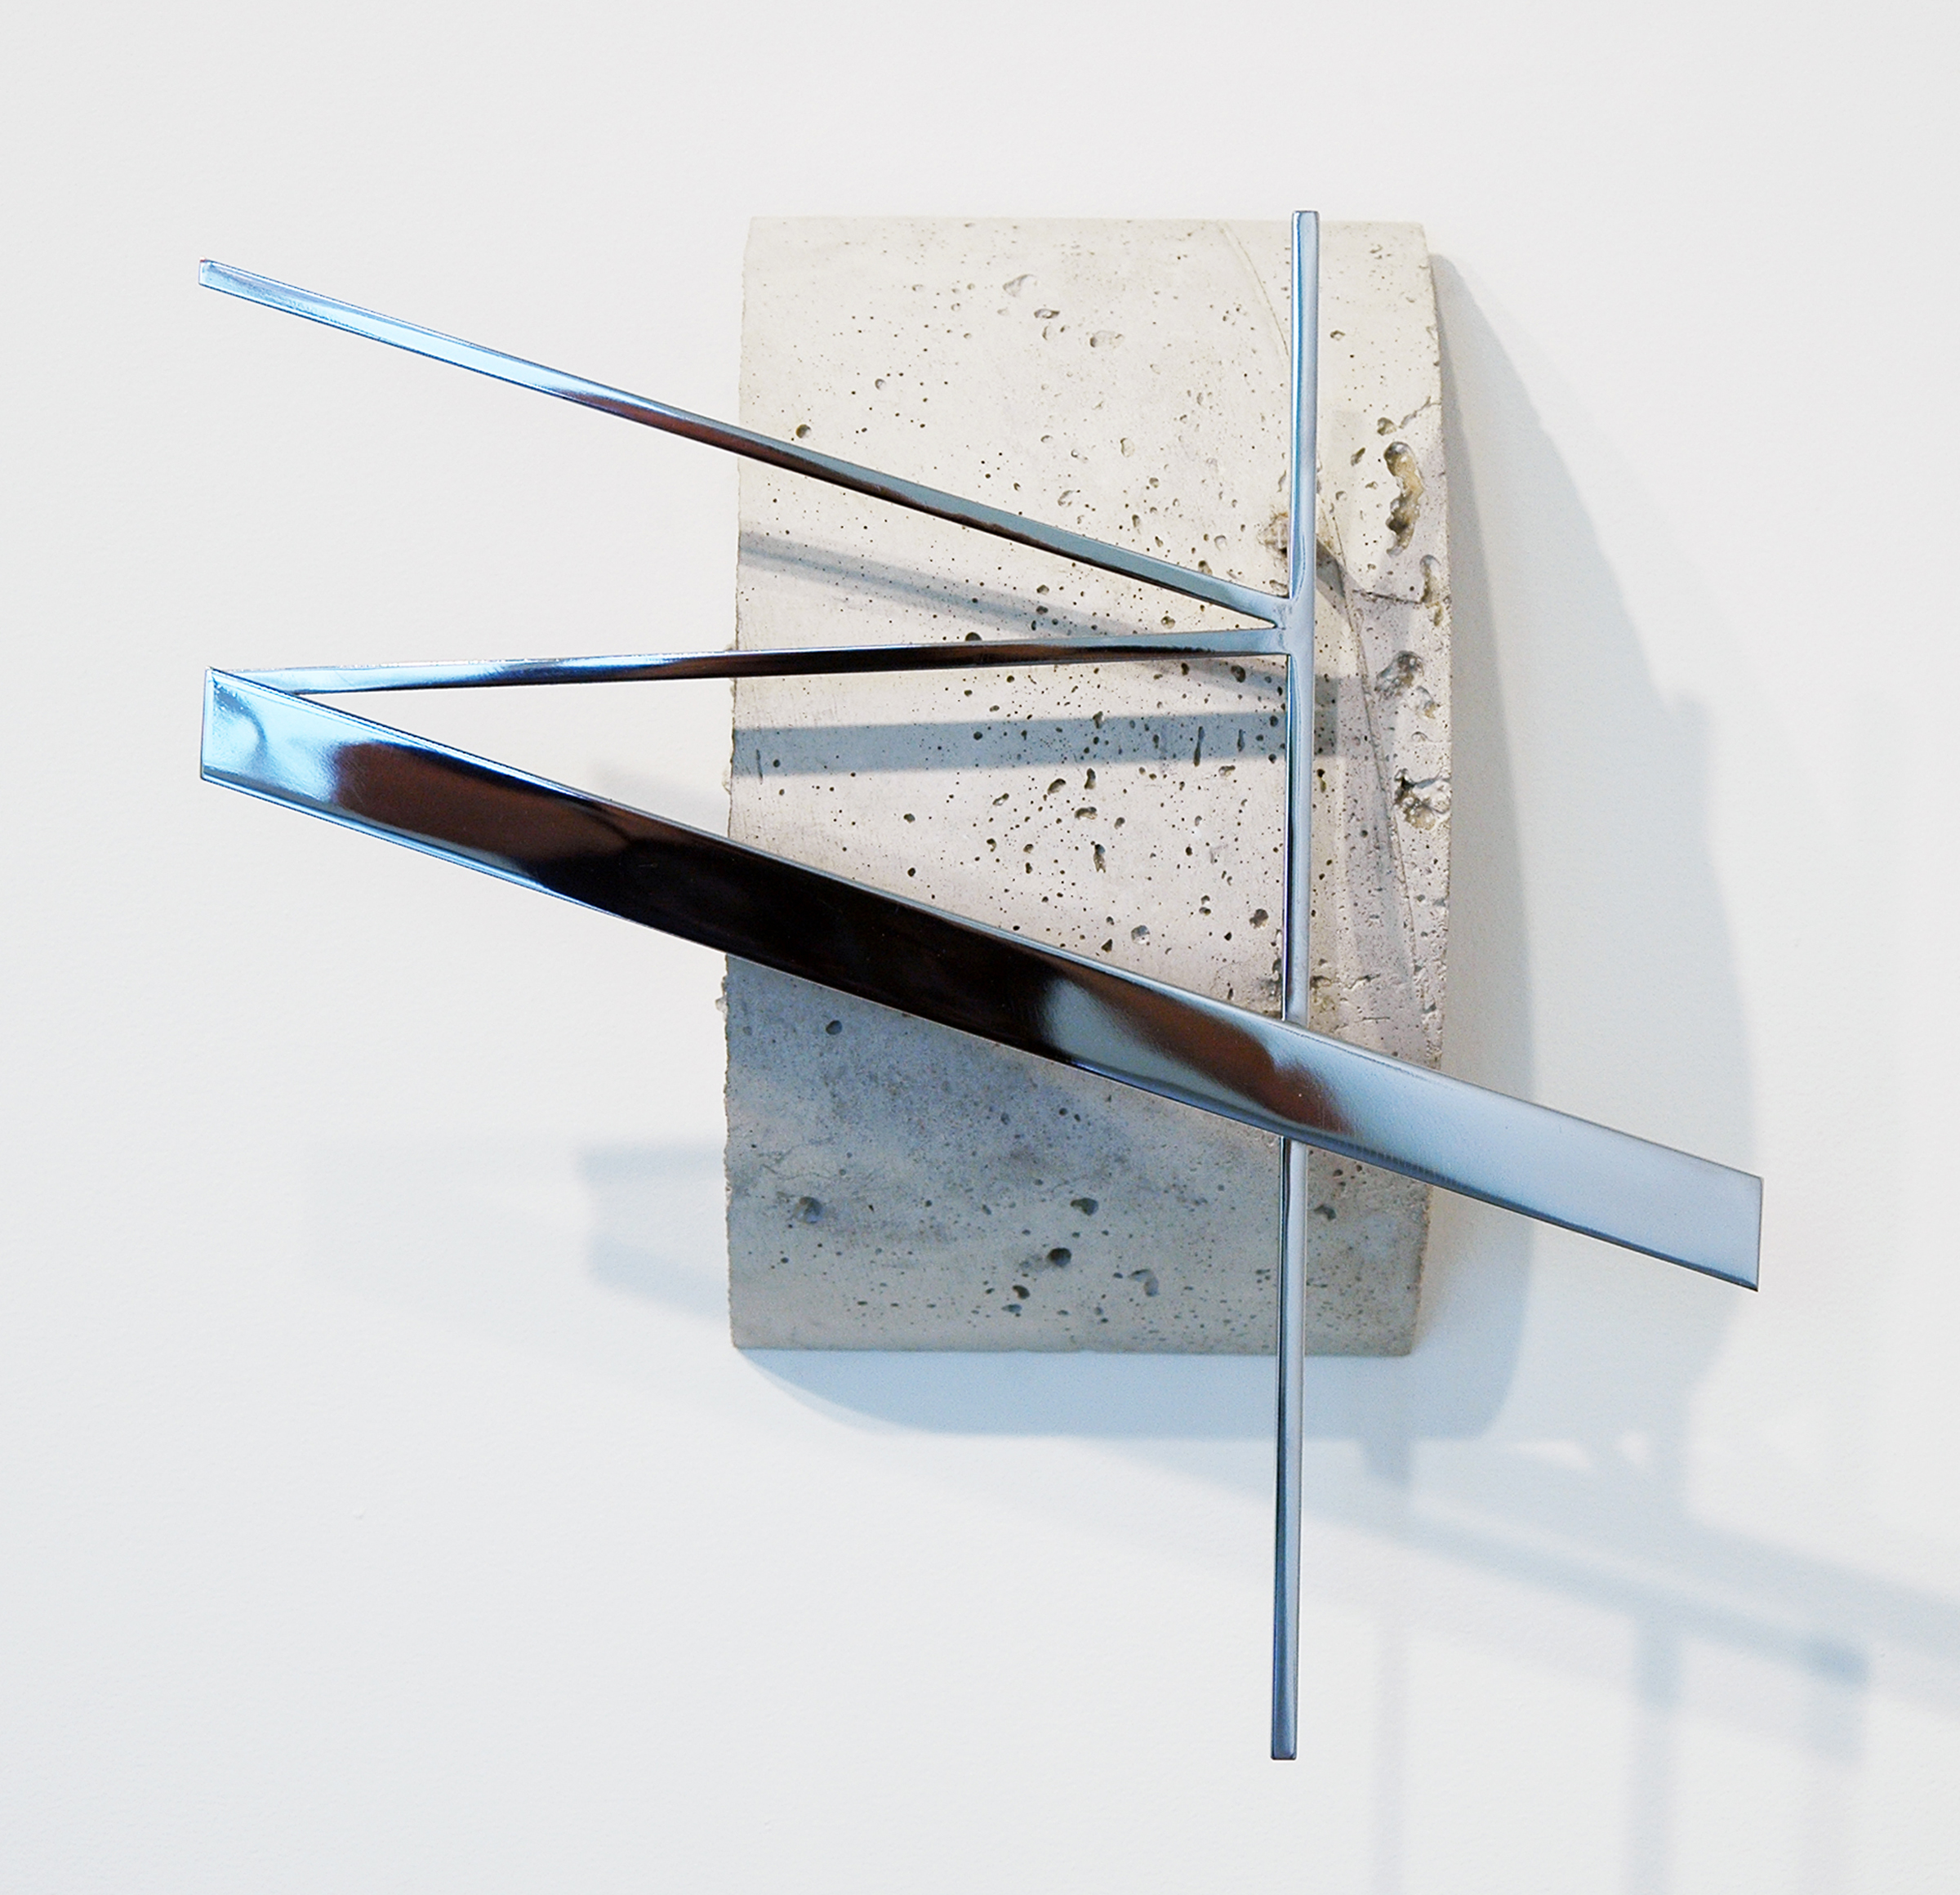   JONATHAN RUNCIO   Untitled , concrete, stainless steel, 14.25" x 14.5" x 5", 2013 